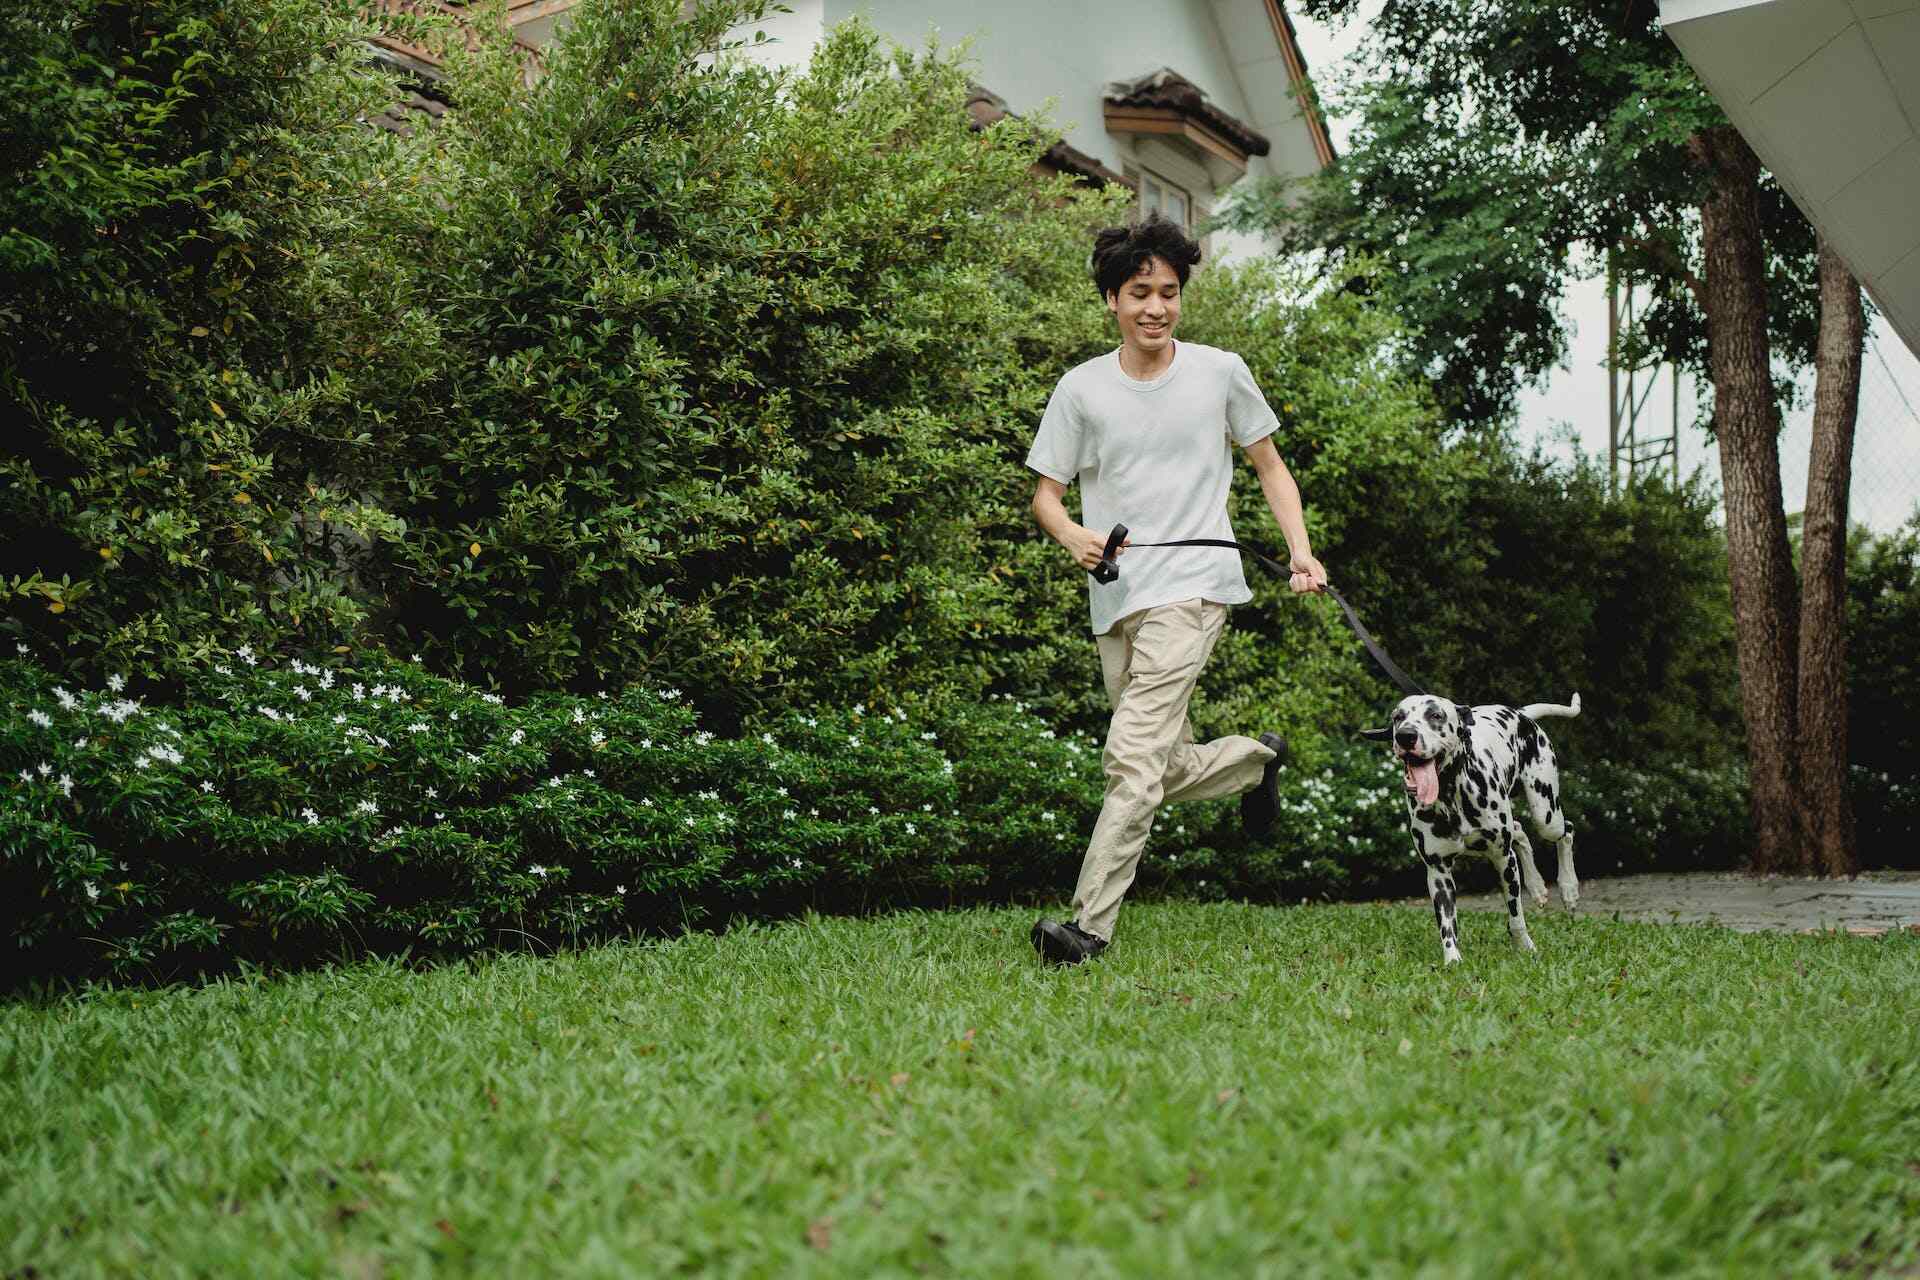 A man running besides a Dalmatian on a leash in a garden